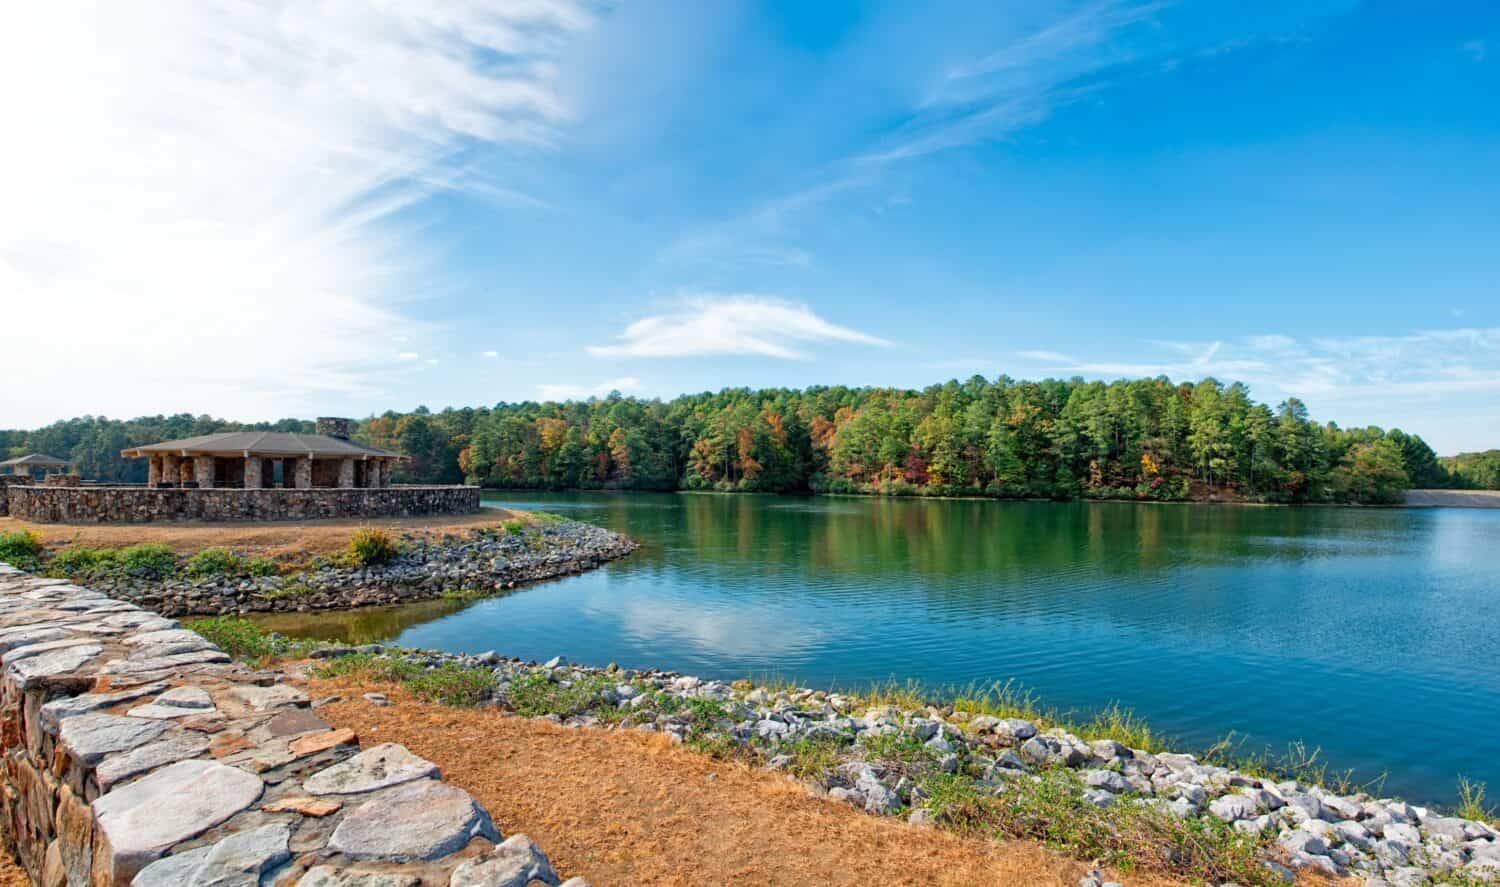 Oak Mountain State Park vicino a Birmingham in Alabama con cielo blu e riflessi sul lago